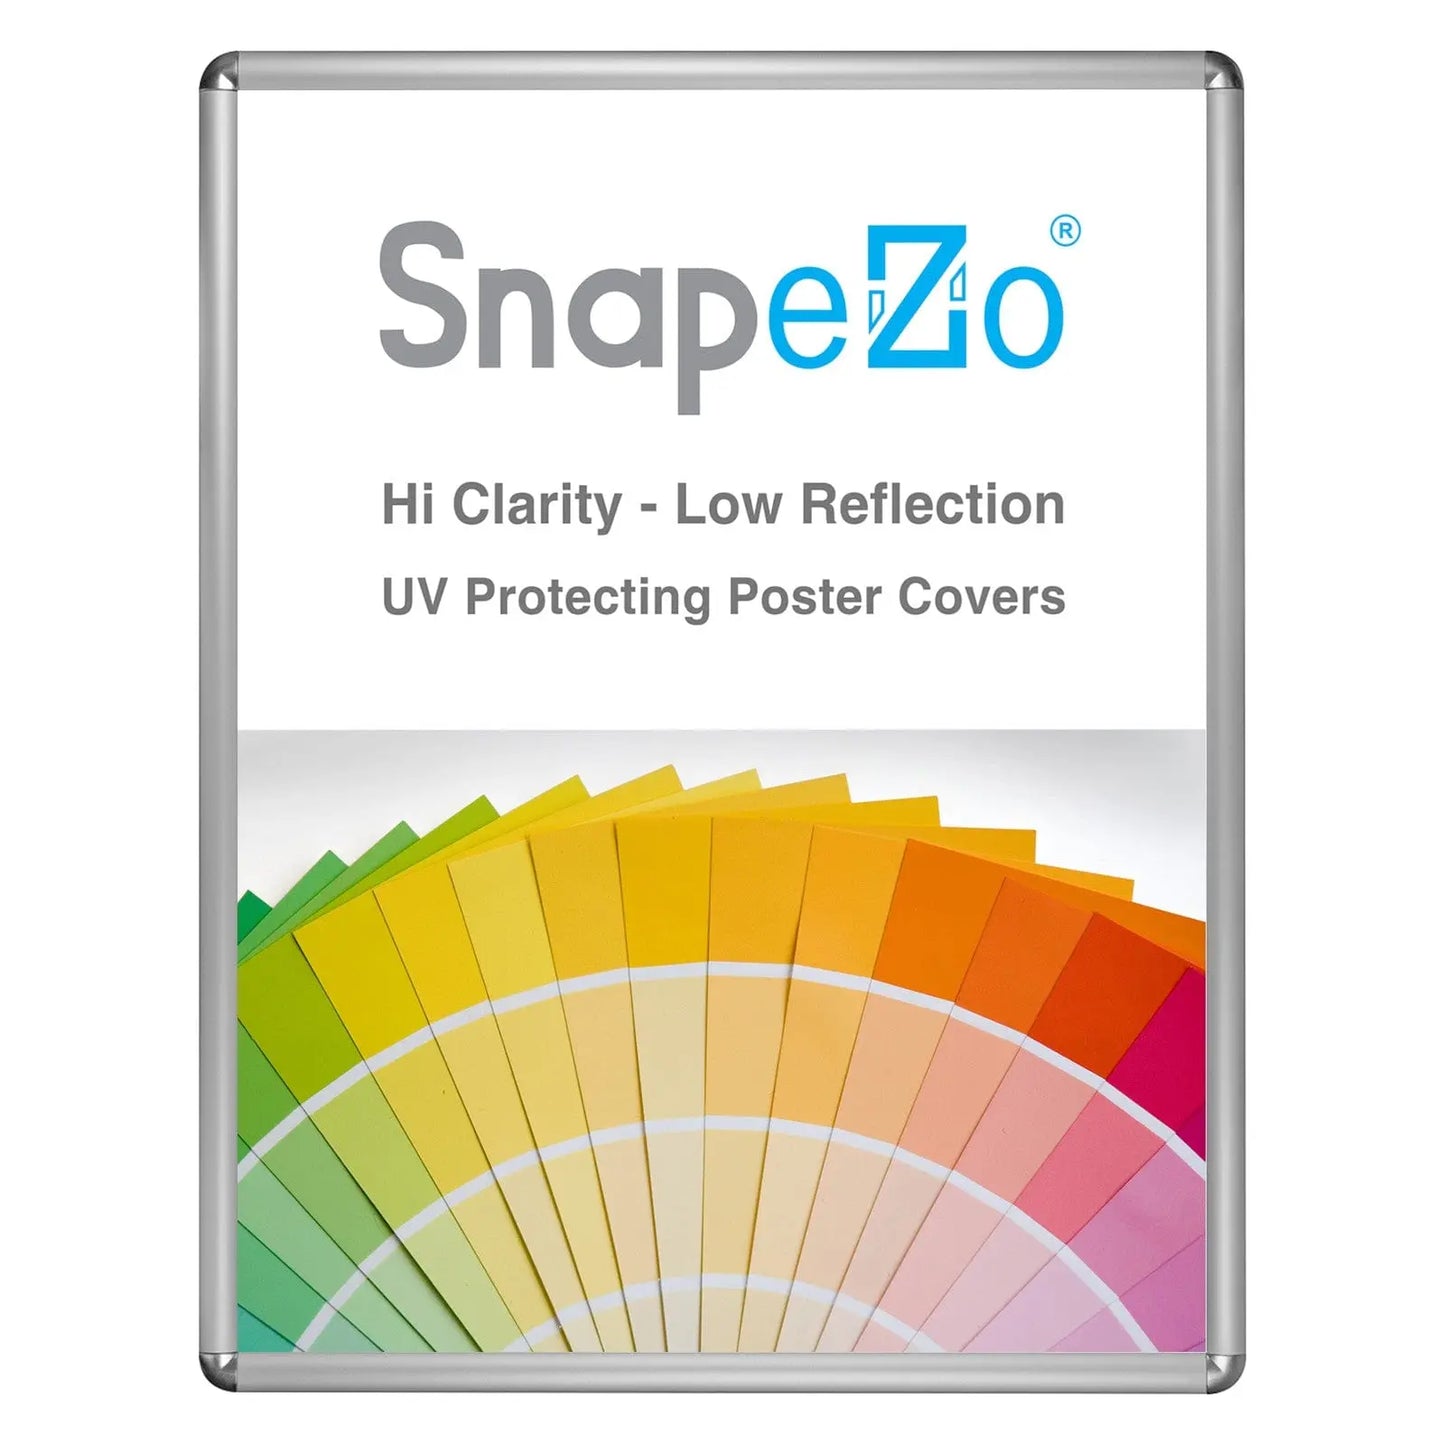 16x20 Silver SnapeZo® Round-Cornered - 1" Profile - Snap Frames Direct